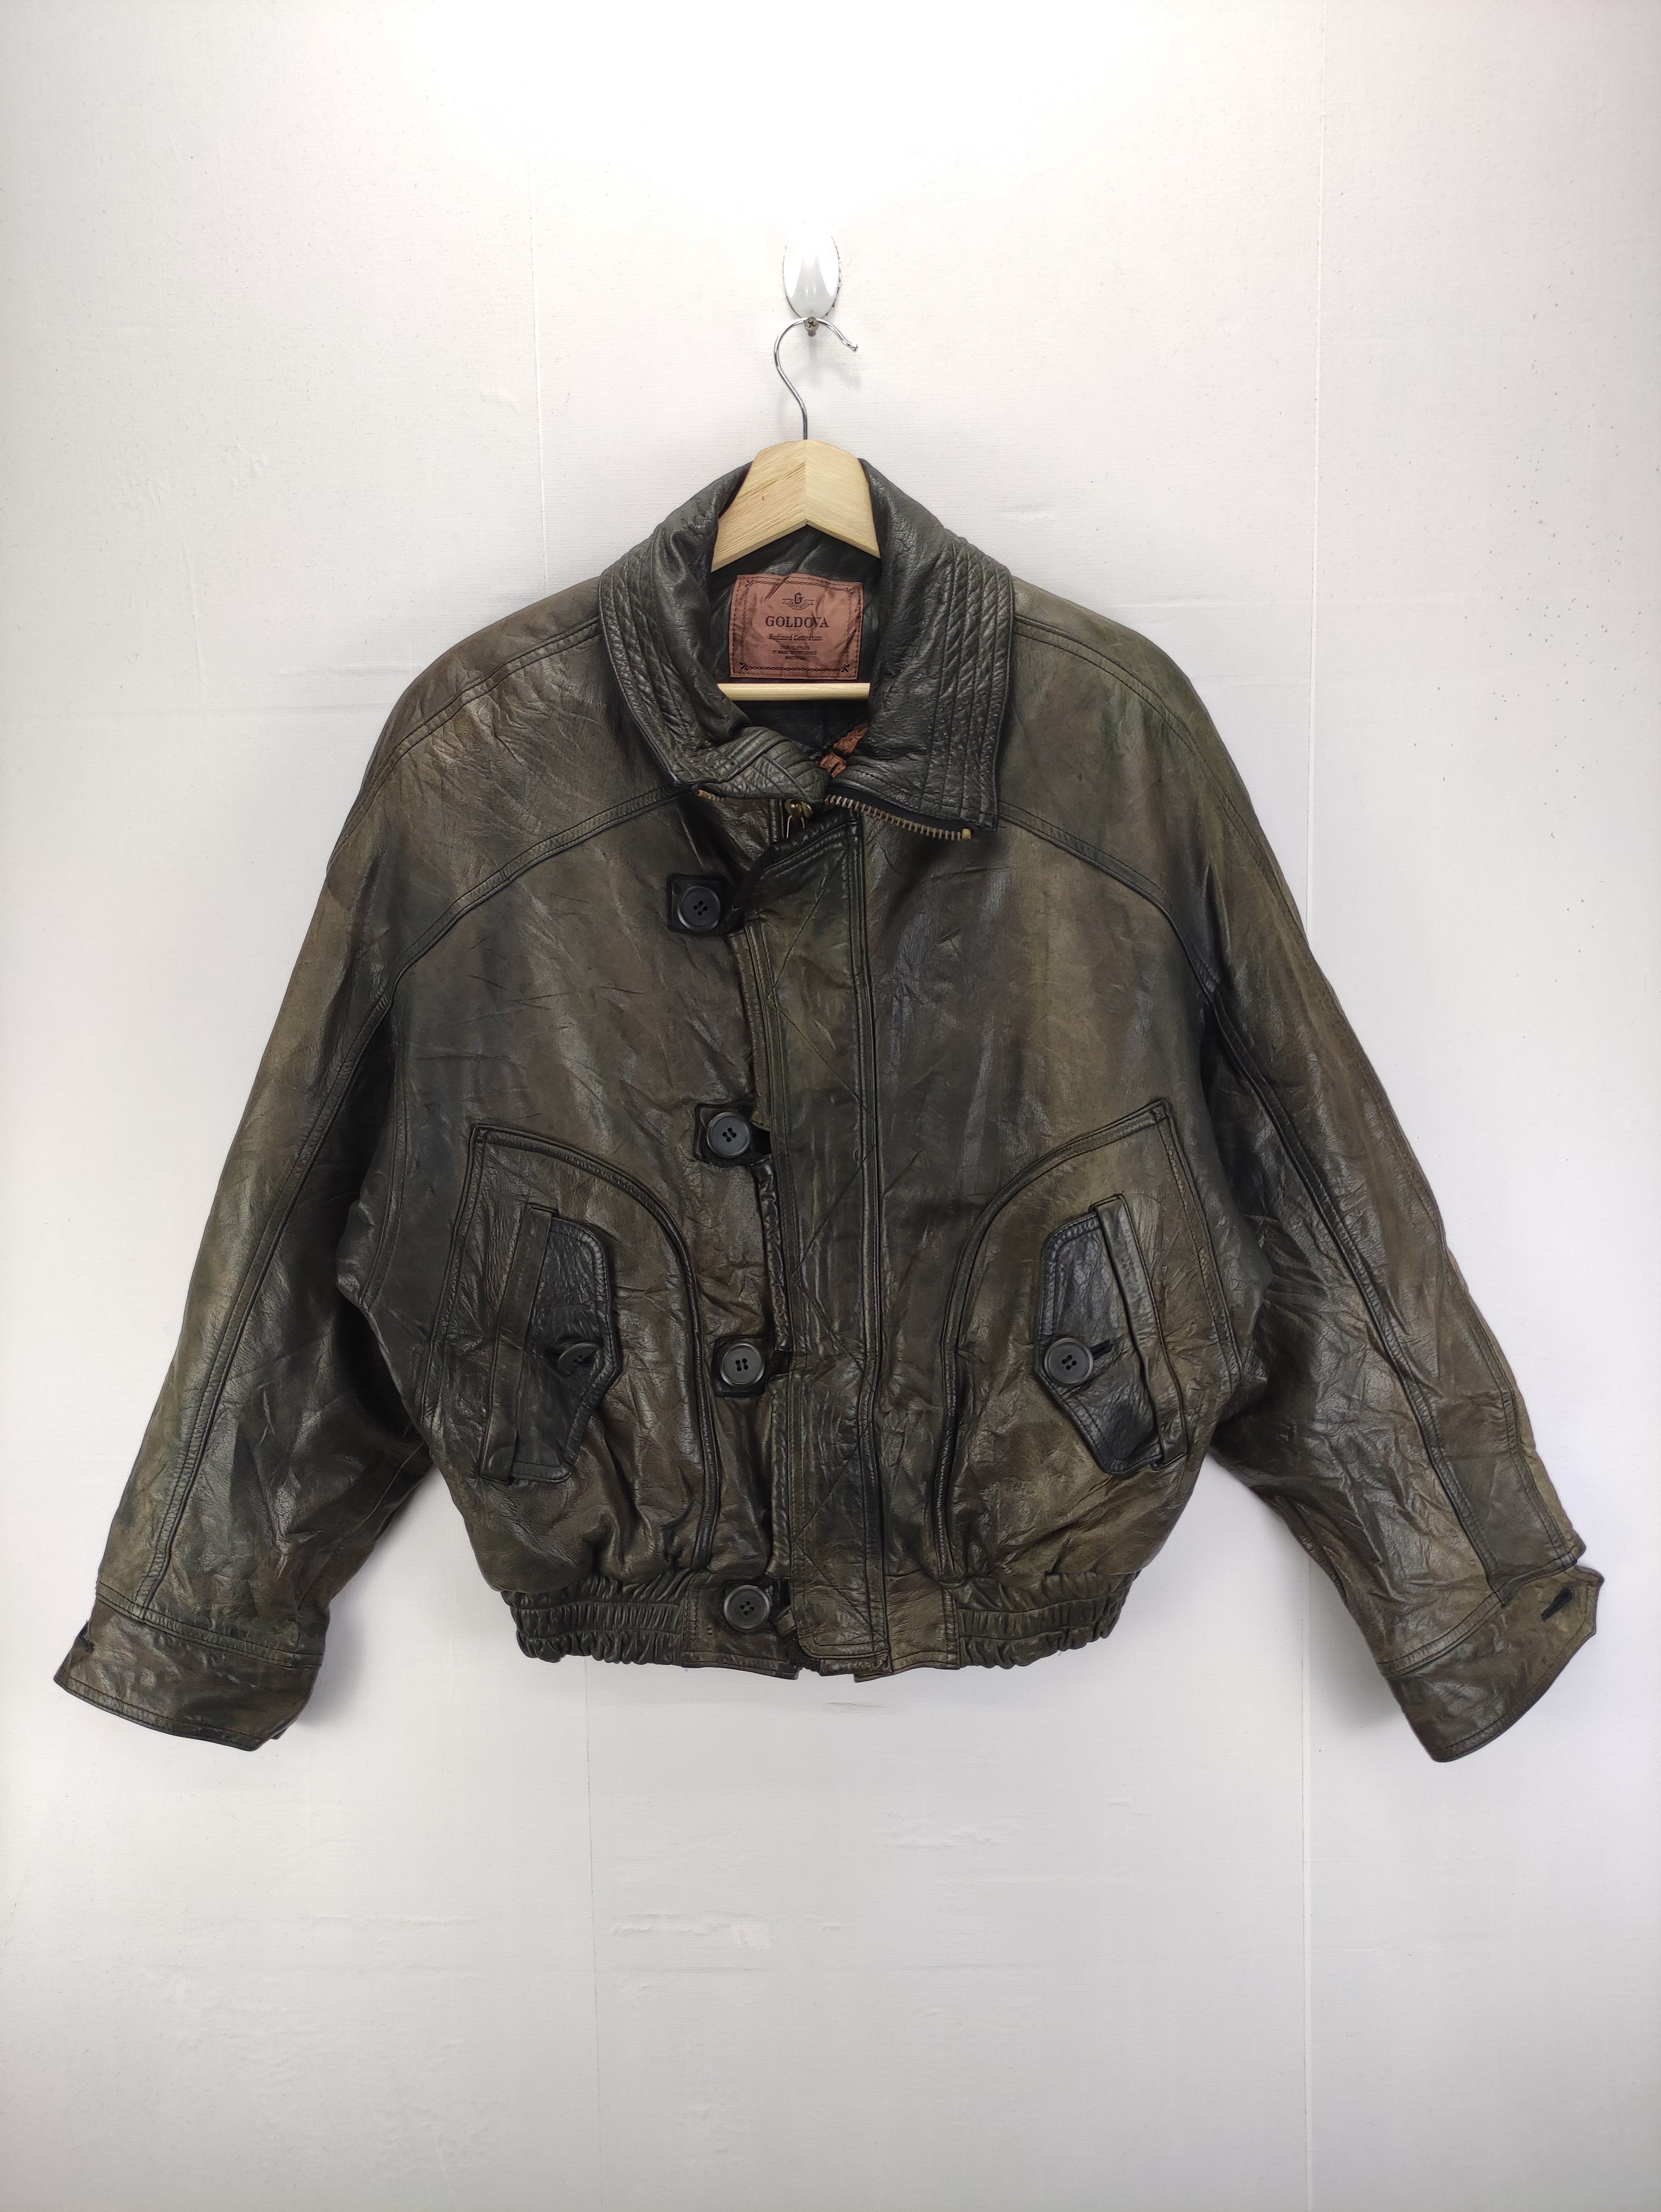 Vintage Goldova Leather Jacket Zipper - 1